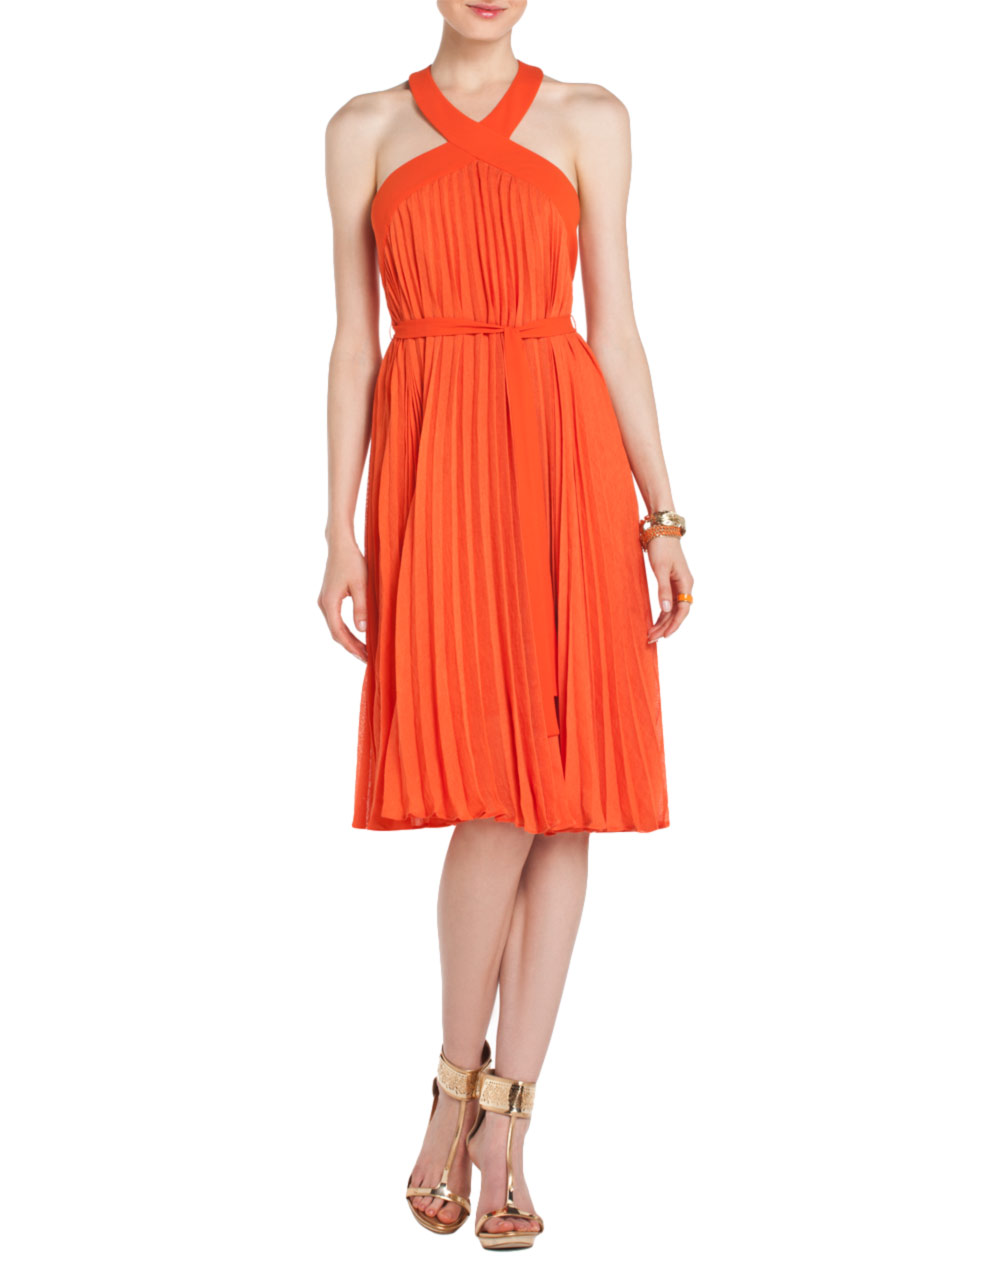 Lyst - Bcbgmaxazria Eloise Pleated Cocktail Dress in Orange